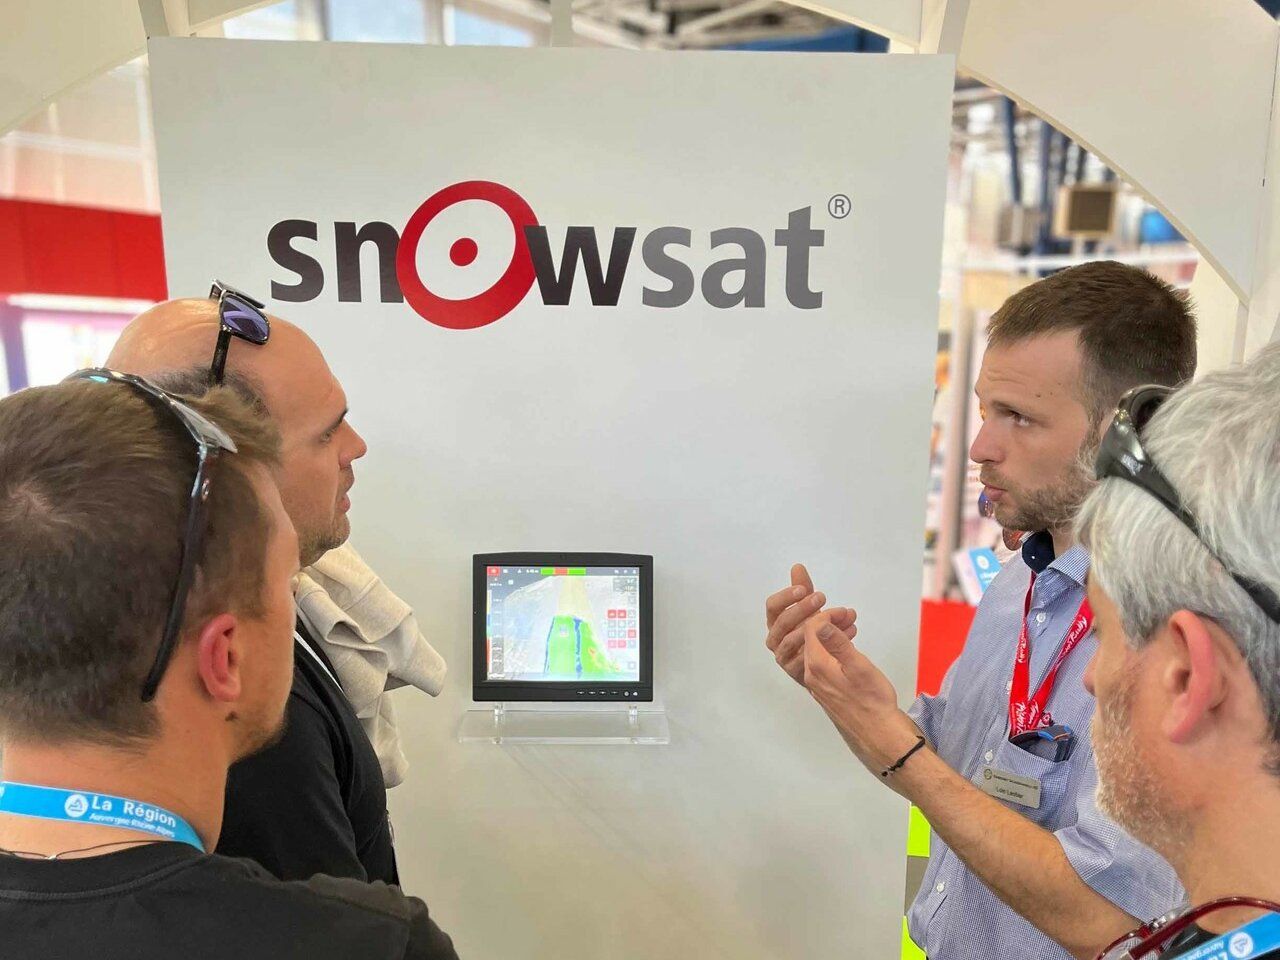 Un membro del team SNOWsat presenta il software